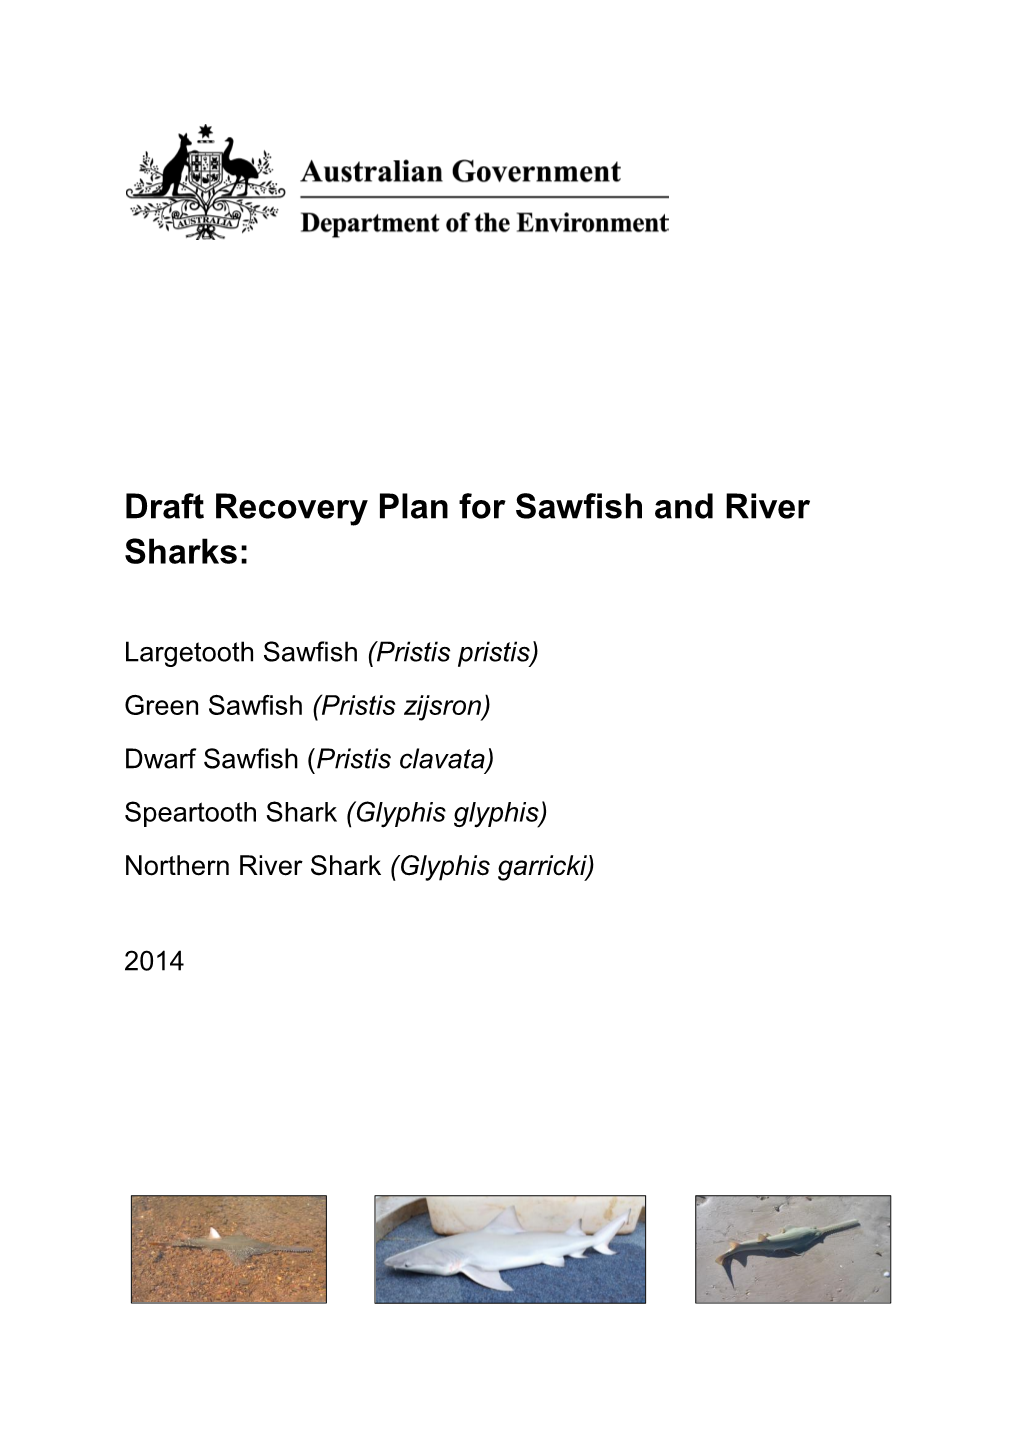 Dwarf Sawfish (Pristis Clavata) Speartooth Shark (Glyphis Glyphis) Northern River Shark (Glyphis Garricki)